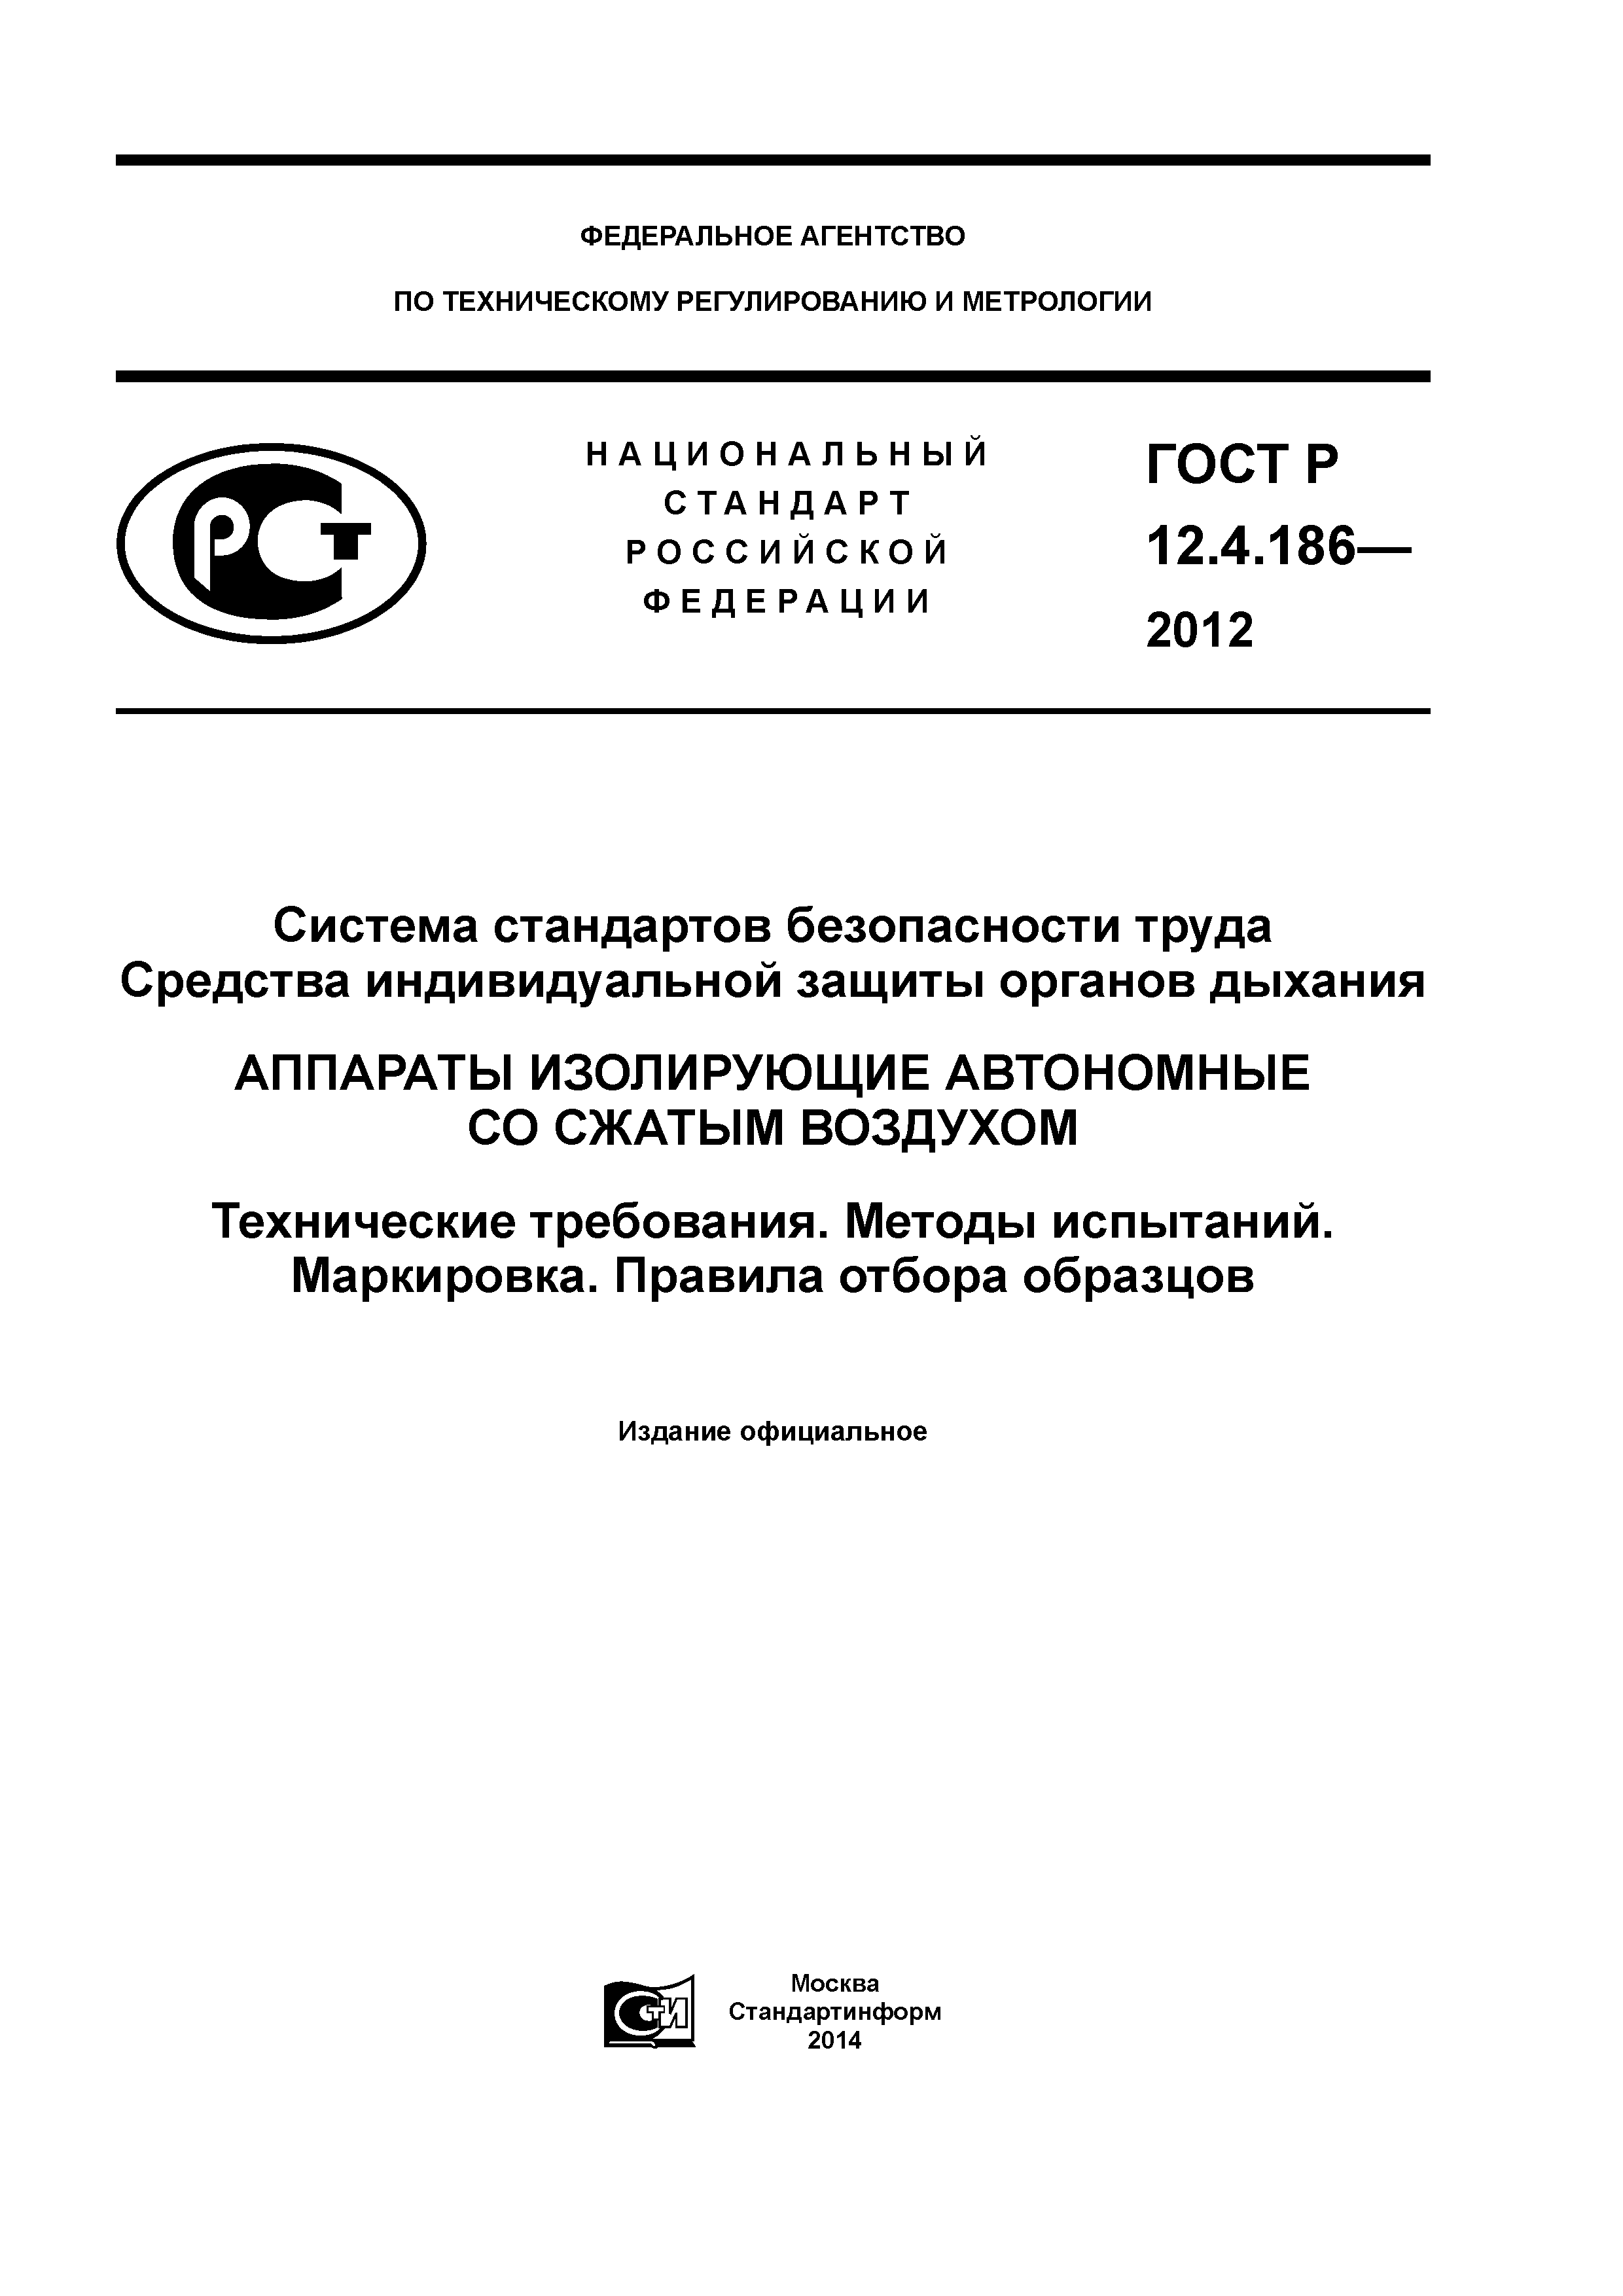 ГОСТ Р 12.4.186-2012